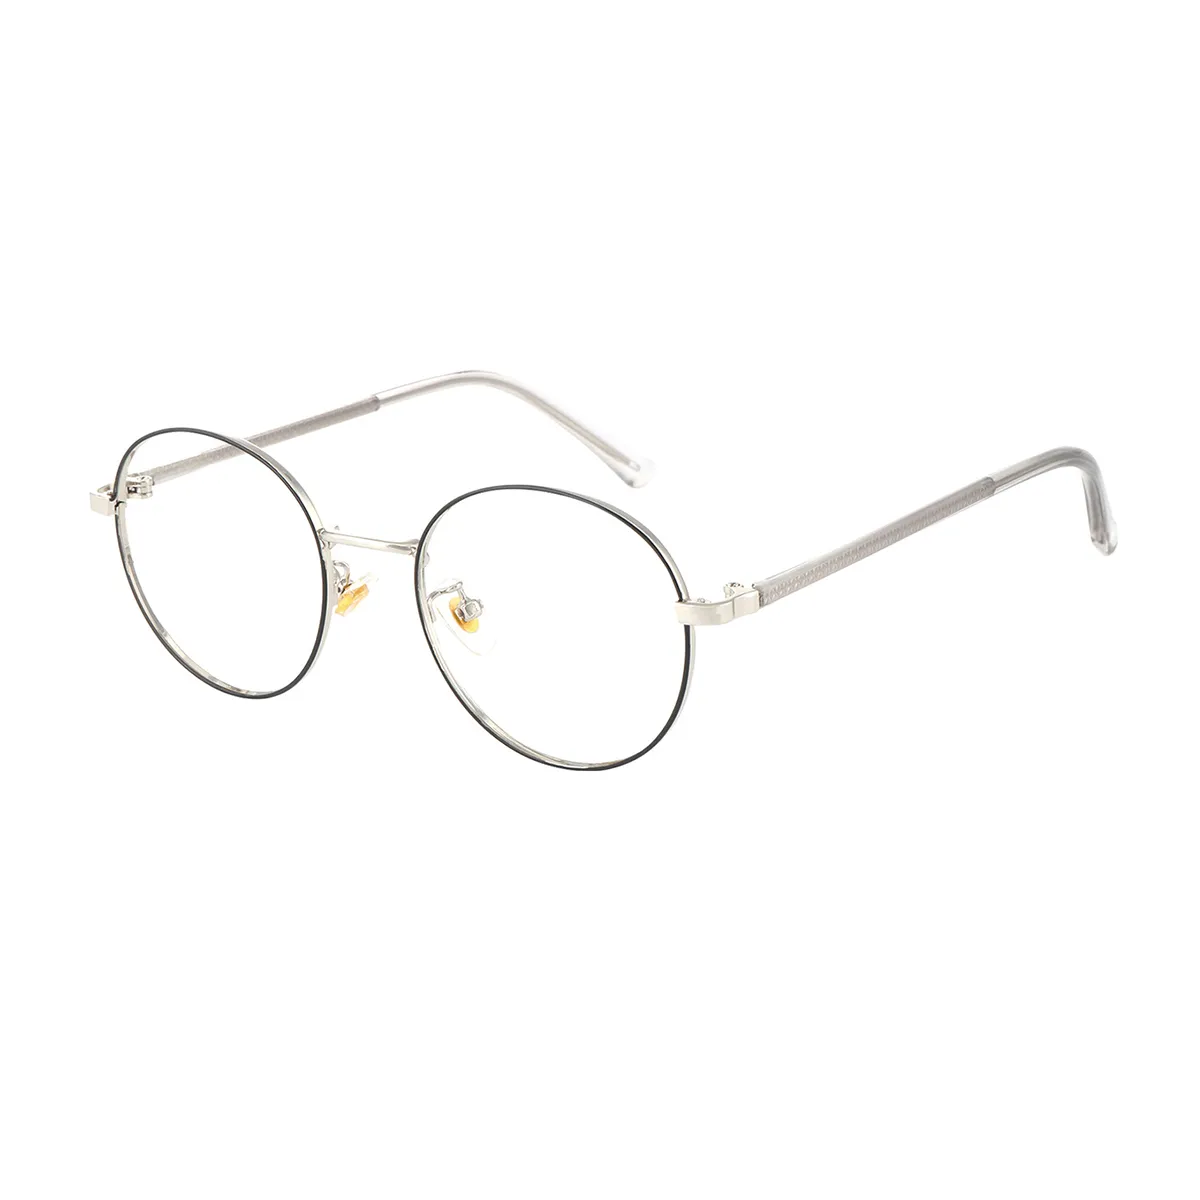 Fashion Round Rose-gold Eyeglasses for Women & Men